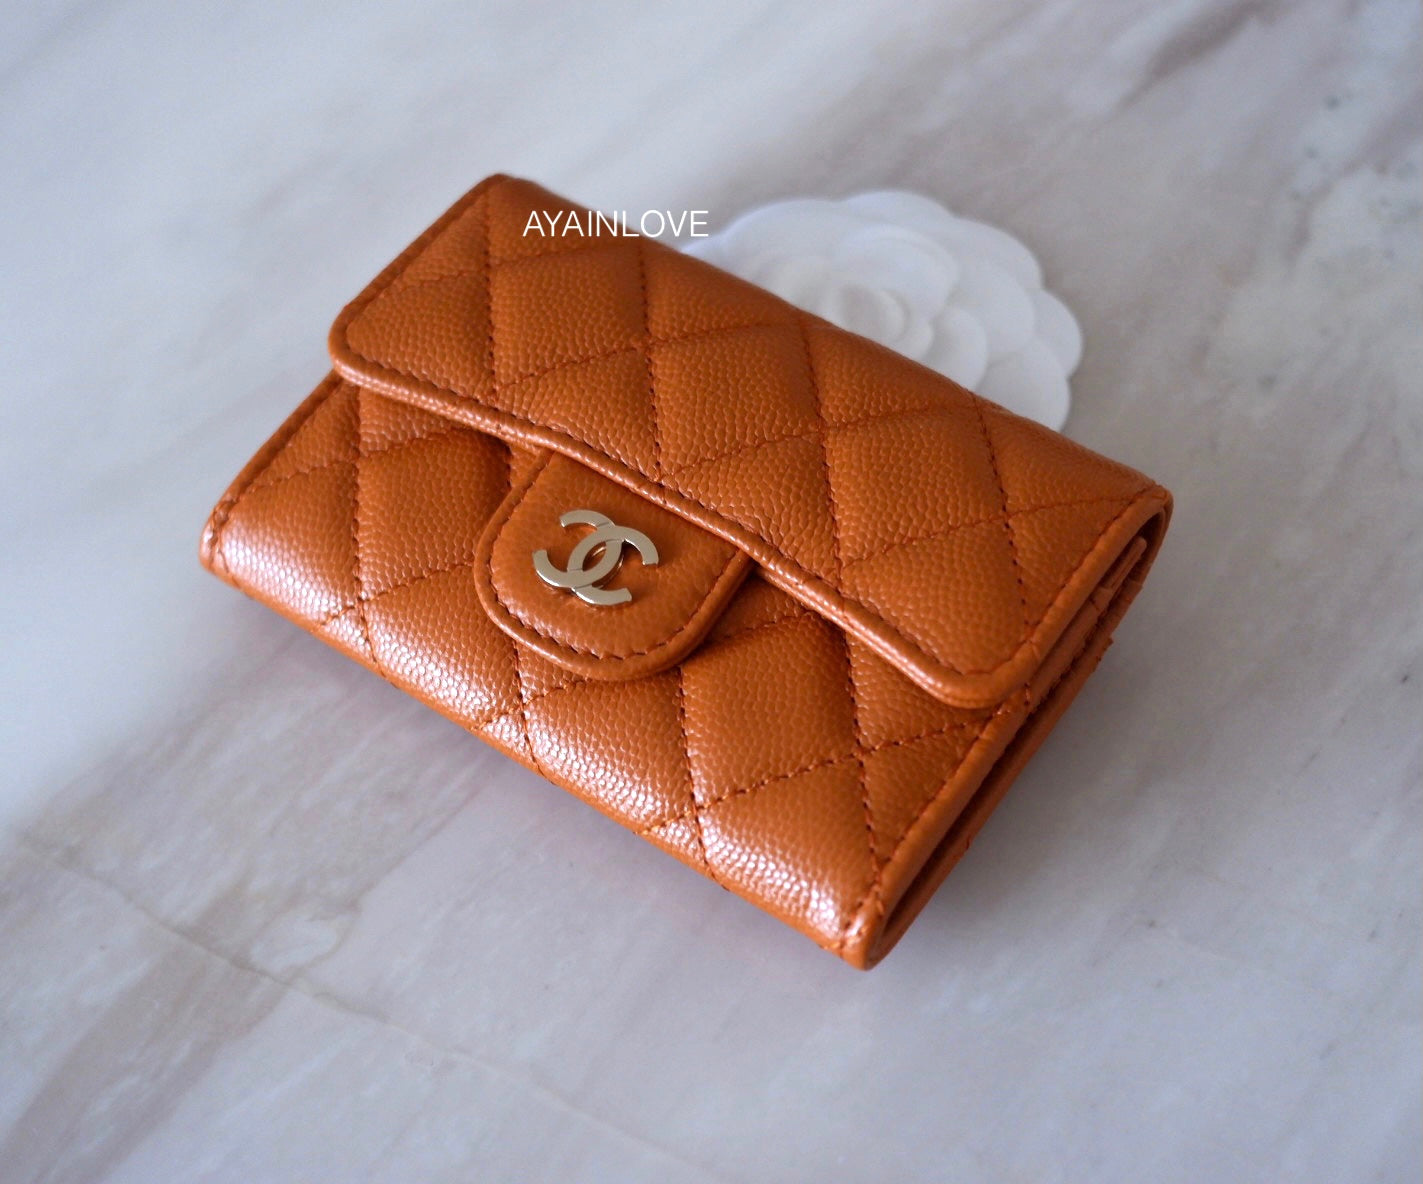 Chanel Flap Card Holder Wallet Beige Caviar Light Gold Hardware